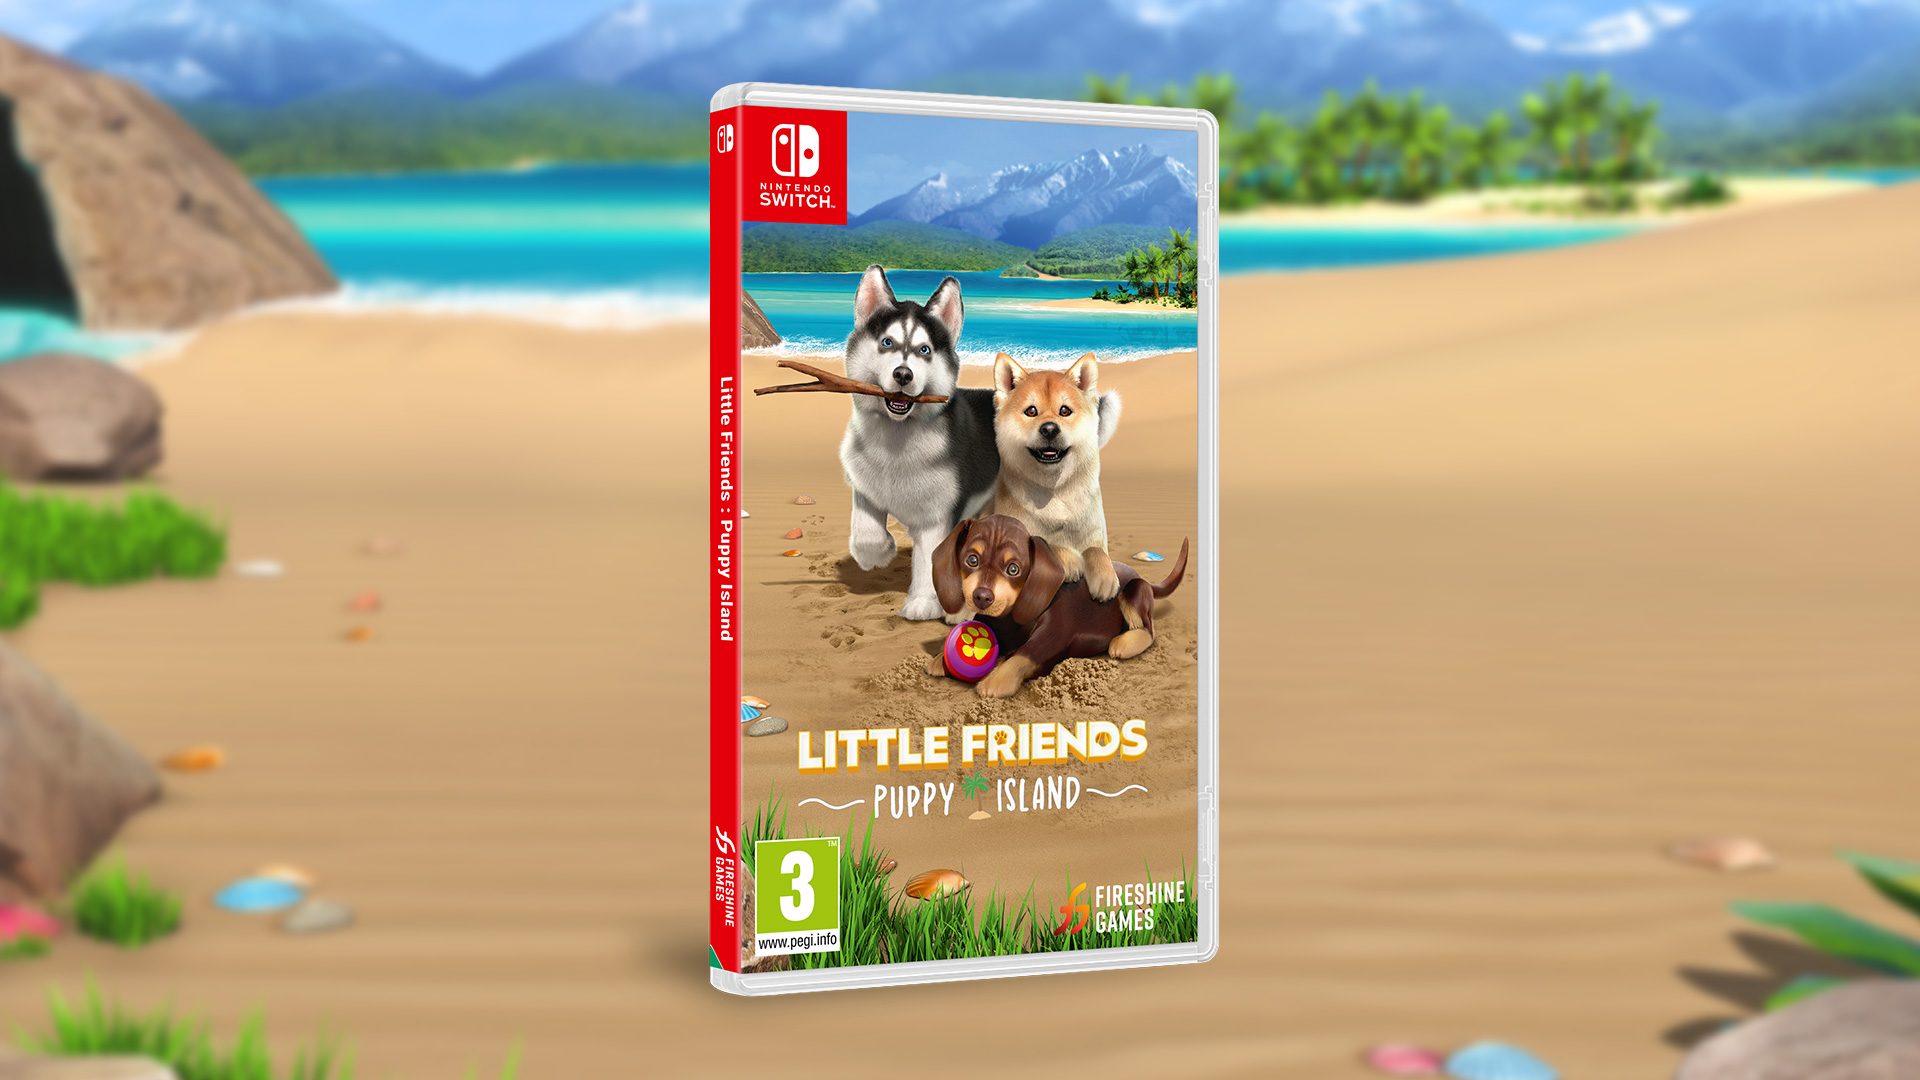 https://www.justforgames.com/wp-content/uploads/2023/03/Little_Friends_Puppy_Island_packshot.jpg